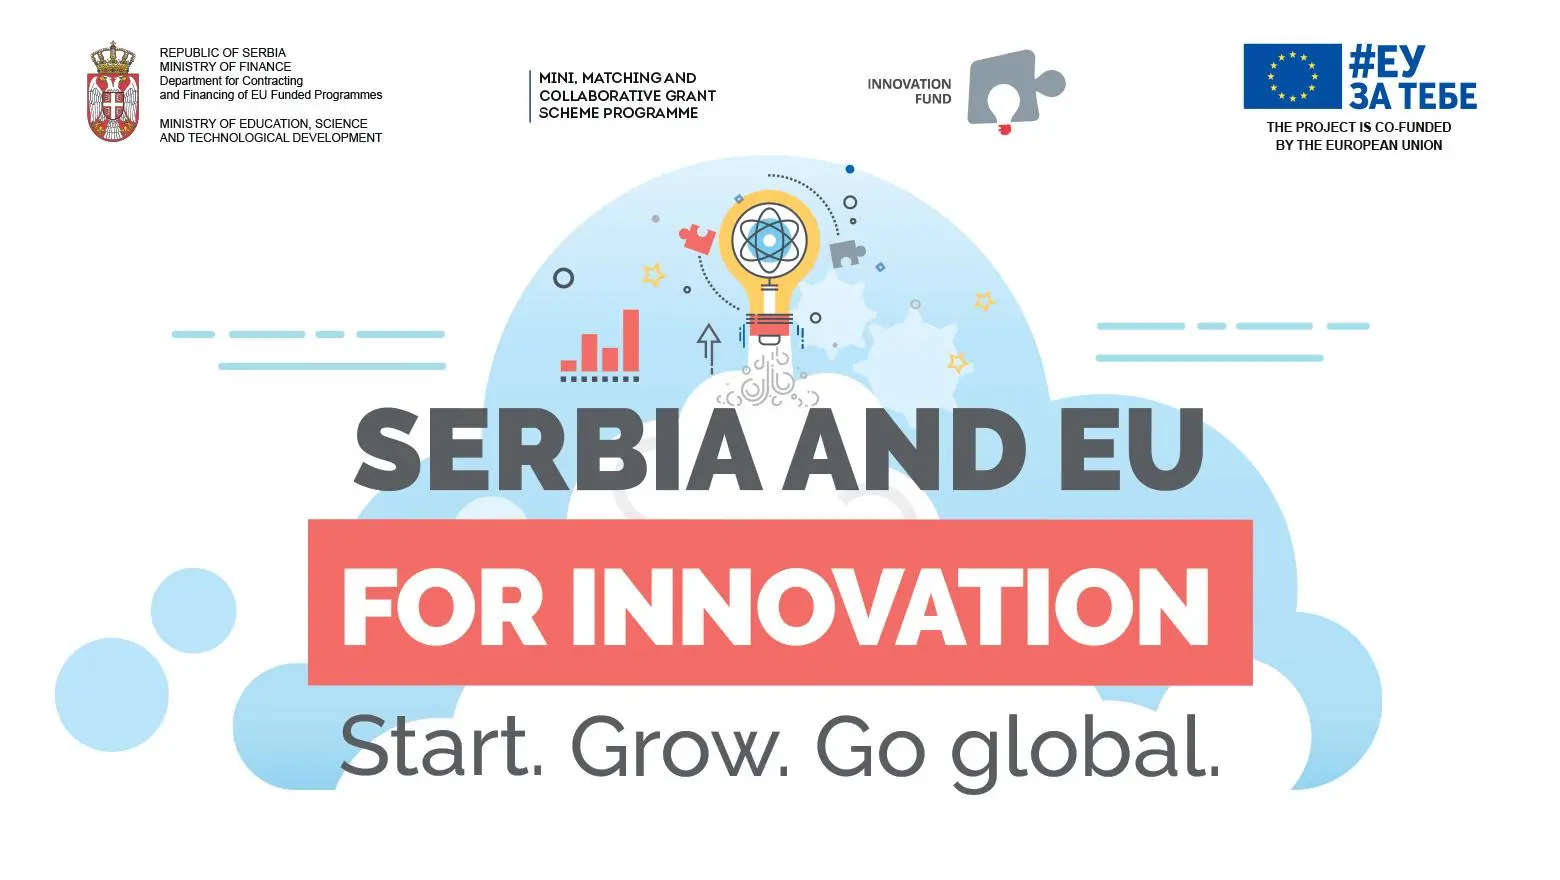 Innovation Fund of Serbia